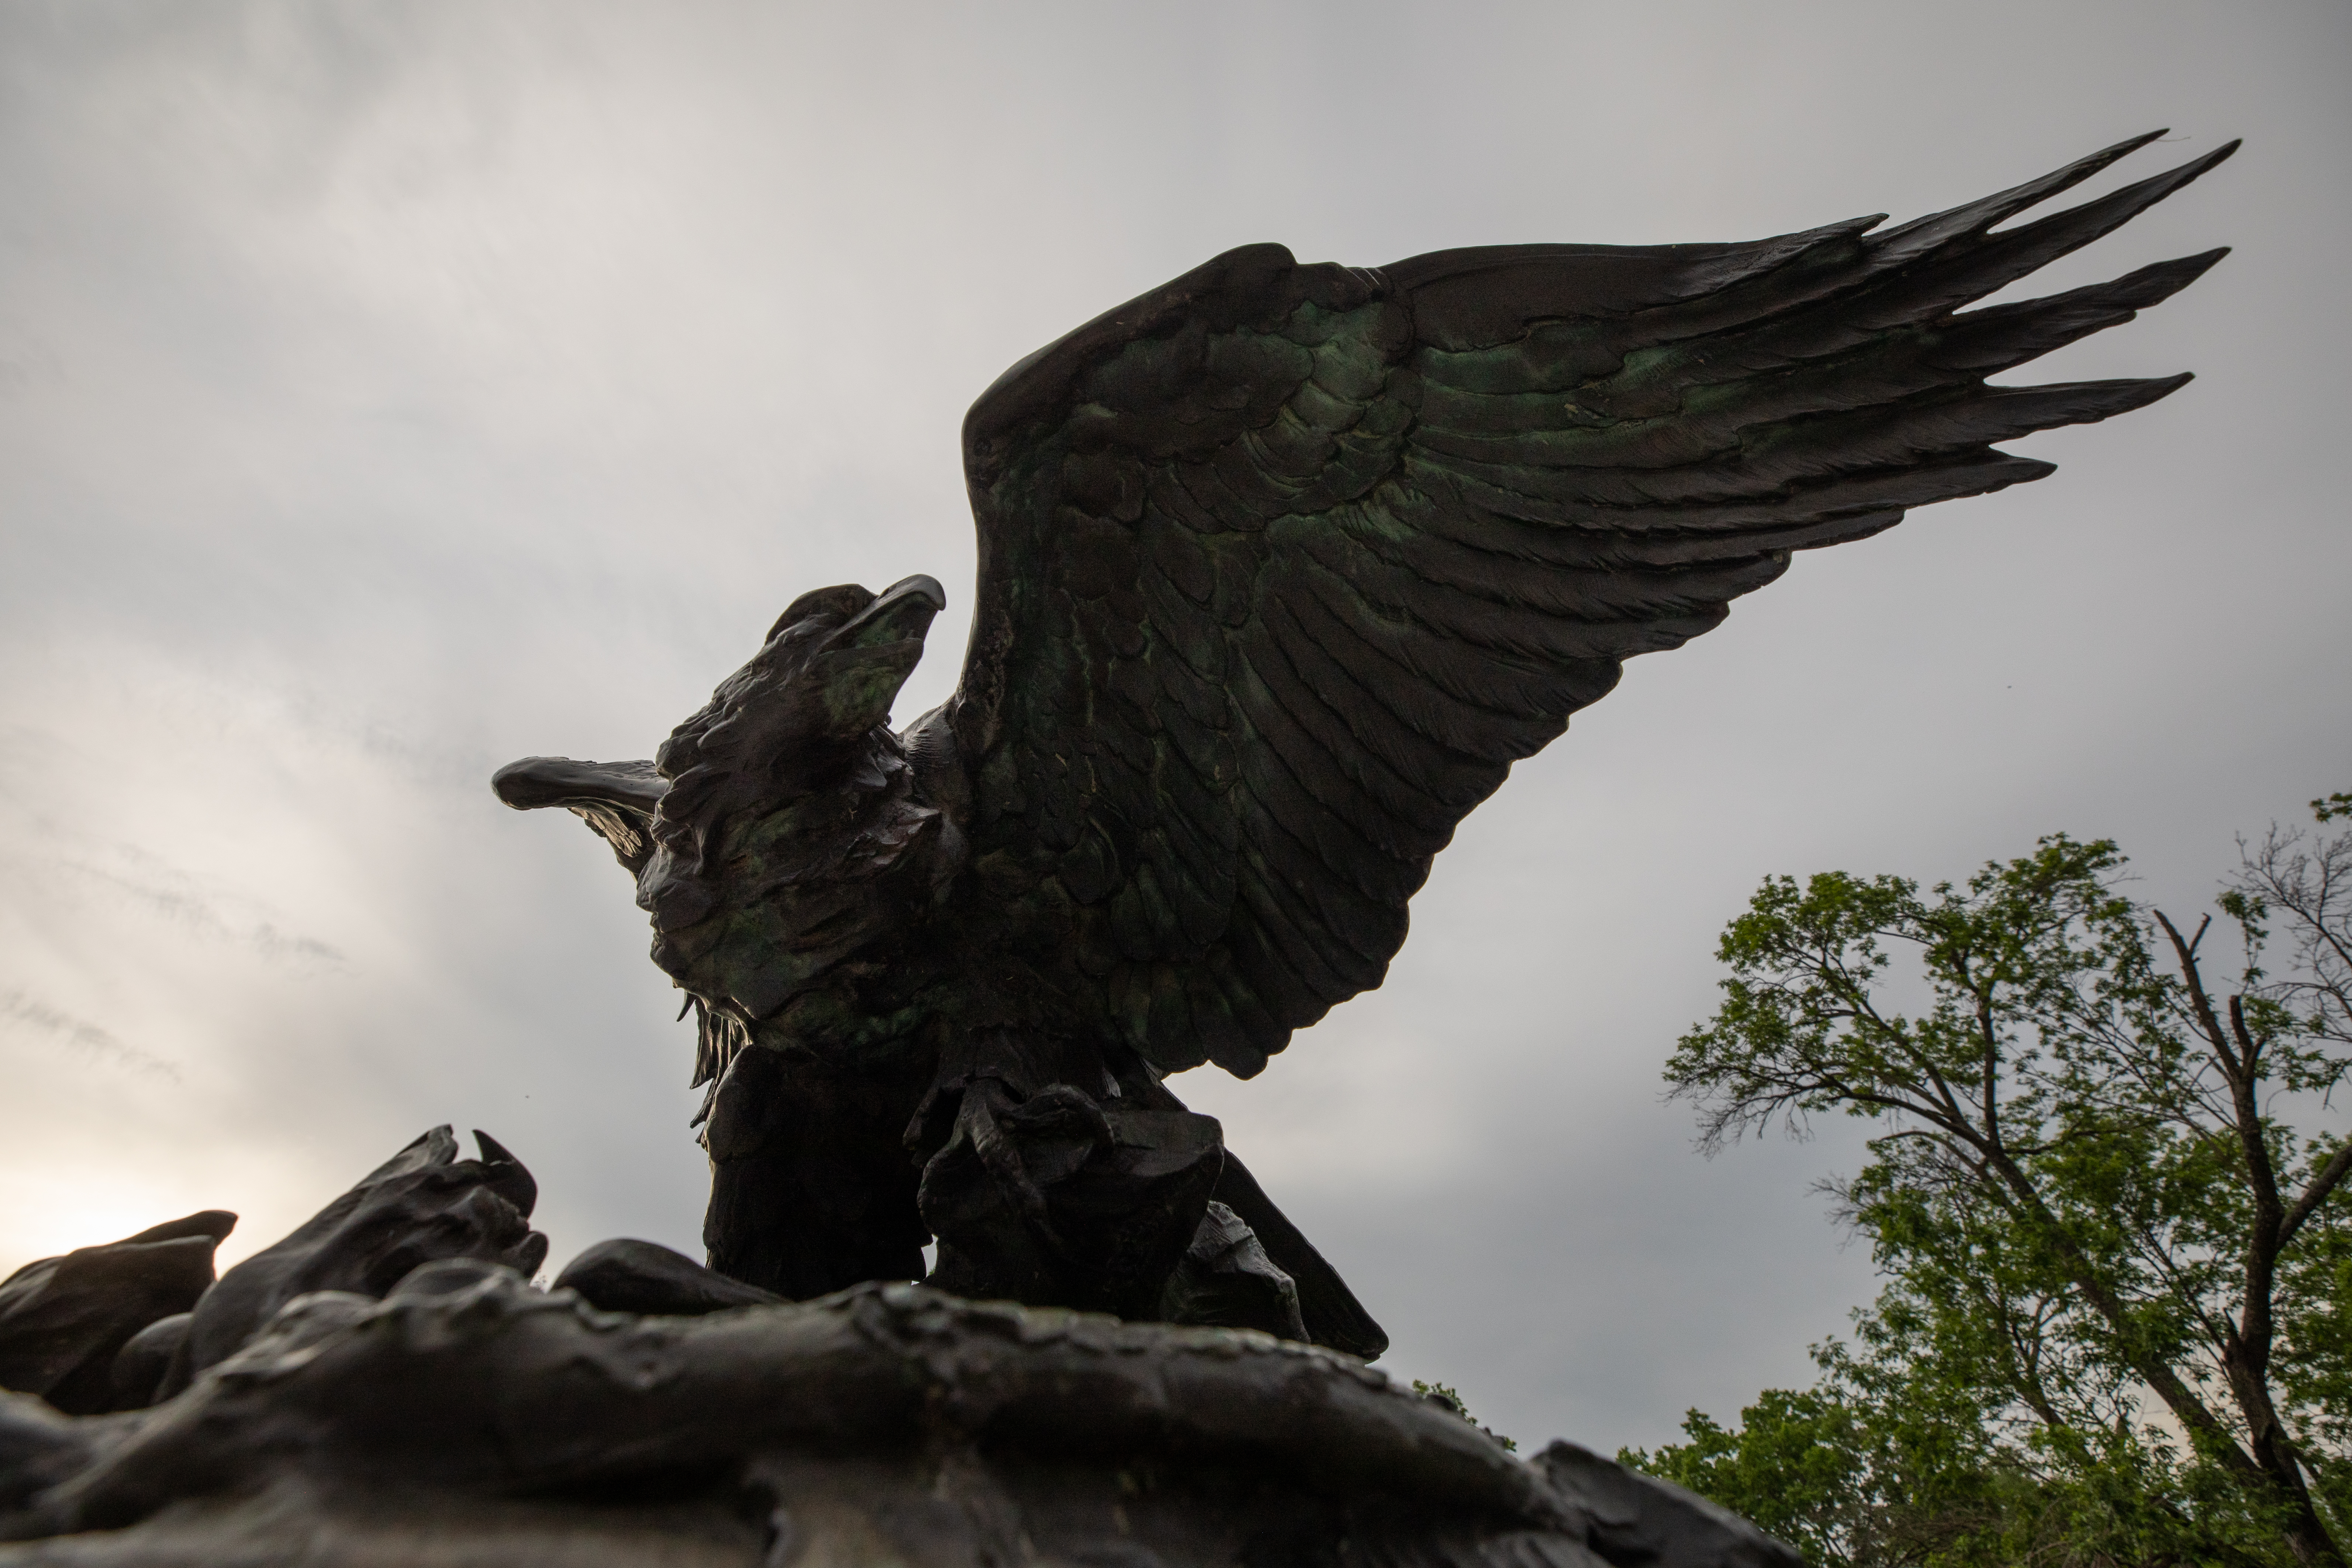 A closeup of the Victory Eagle